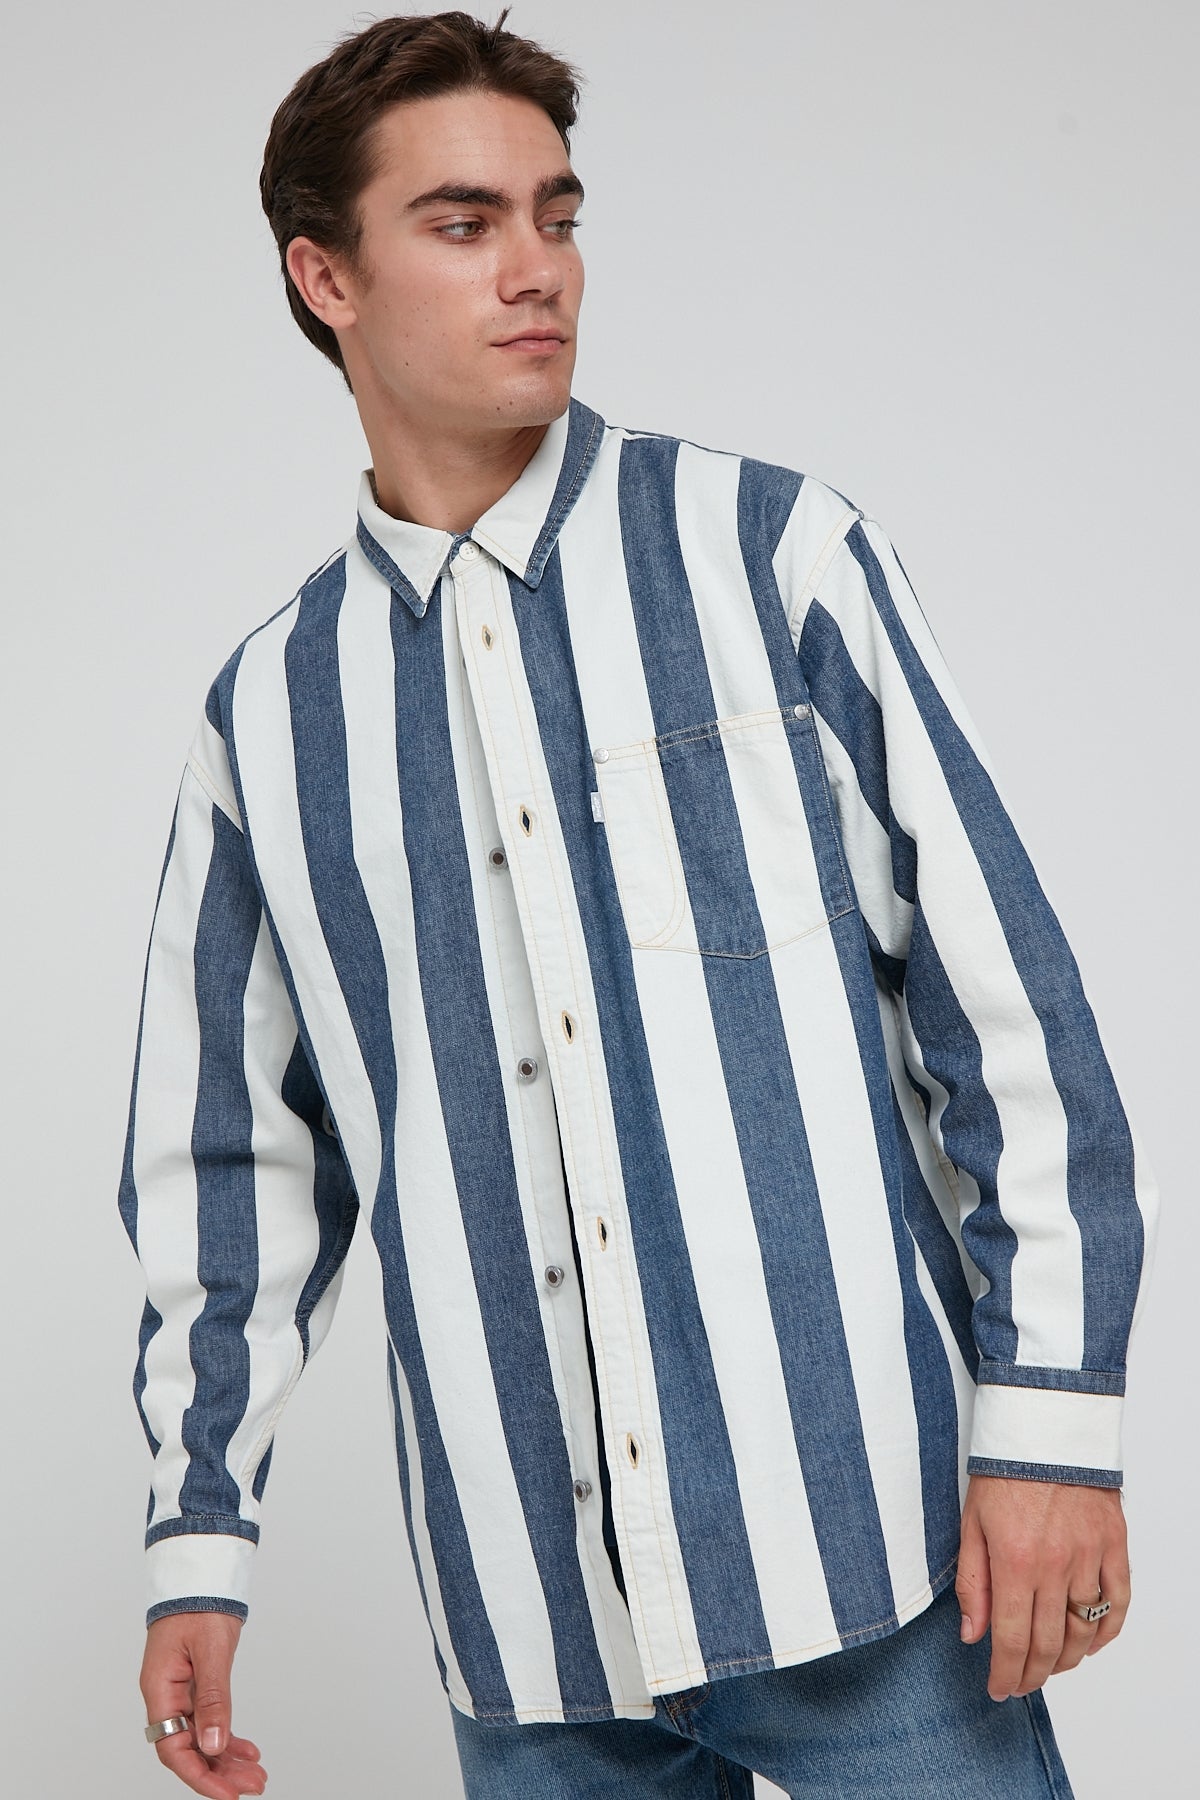 Levi's Silvertab Oversize Shirt Blue Stripe